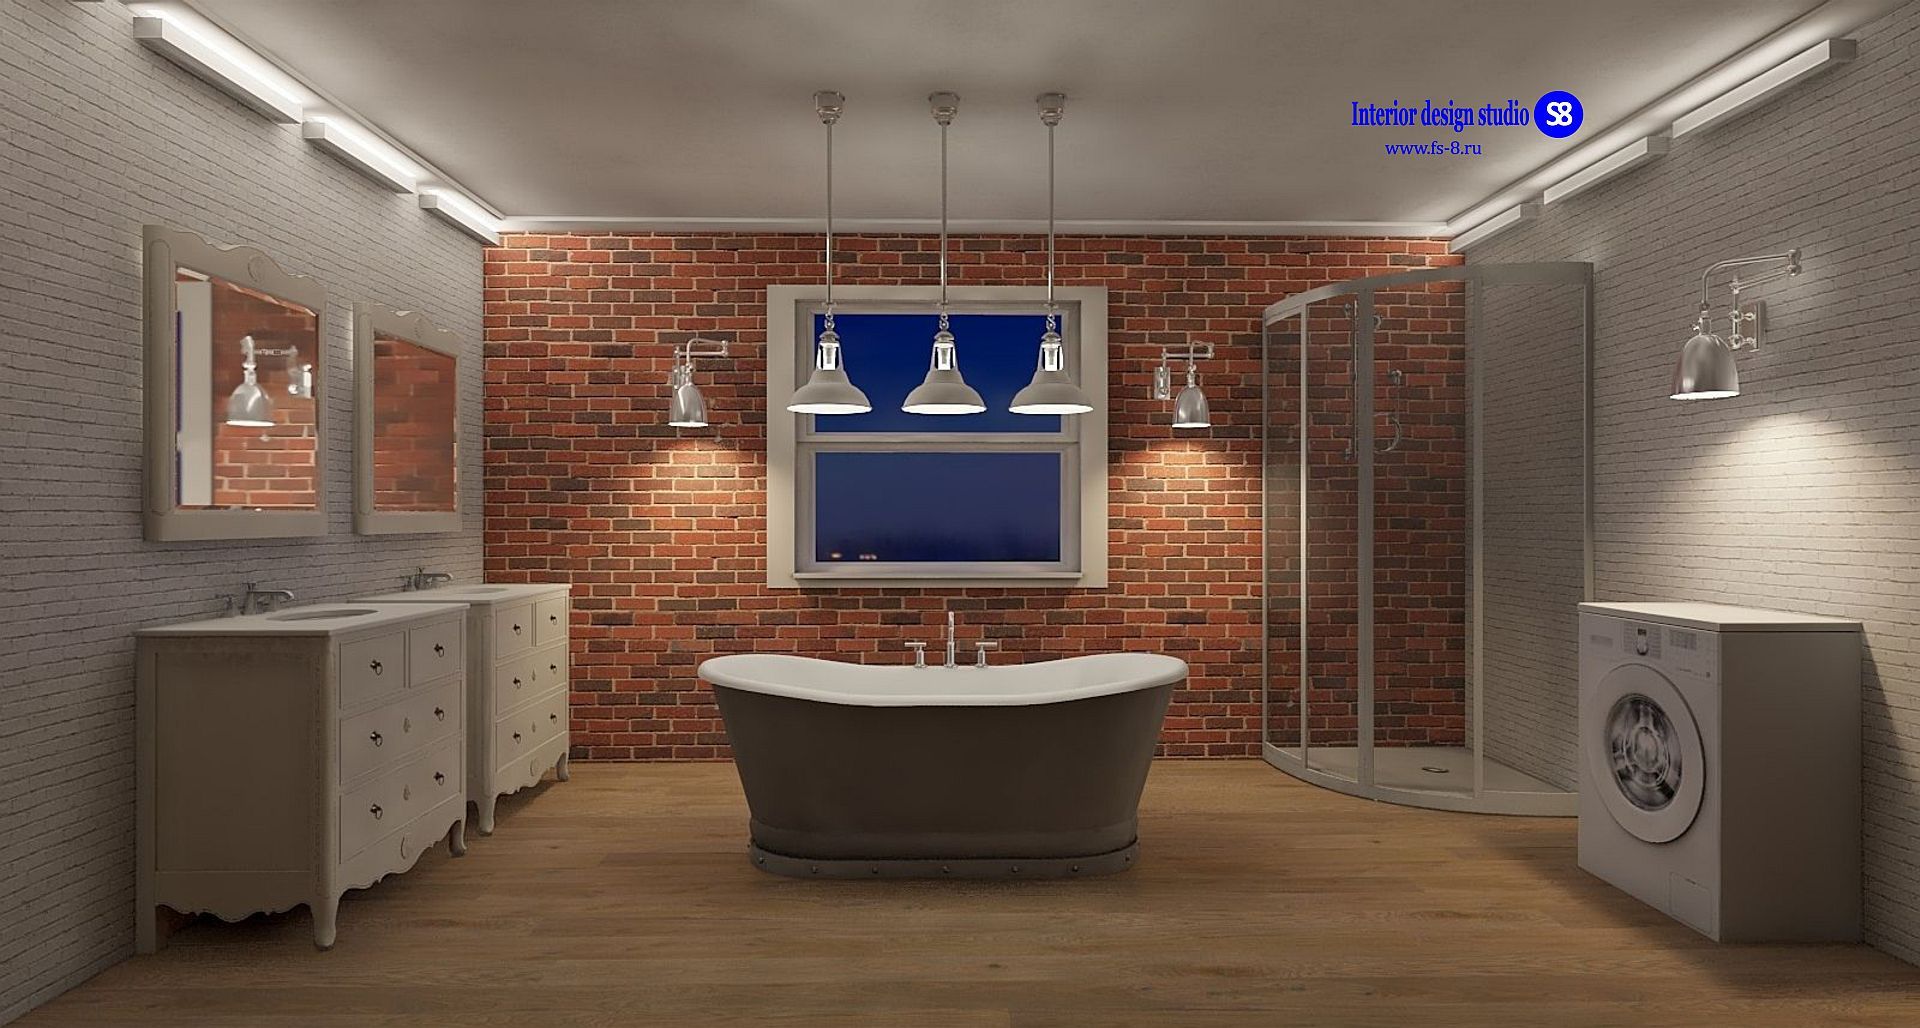 Bathroom in Loft Style 'Design studio S-8' Industrial style bathroom bathroom,,interiordesign,,loft